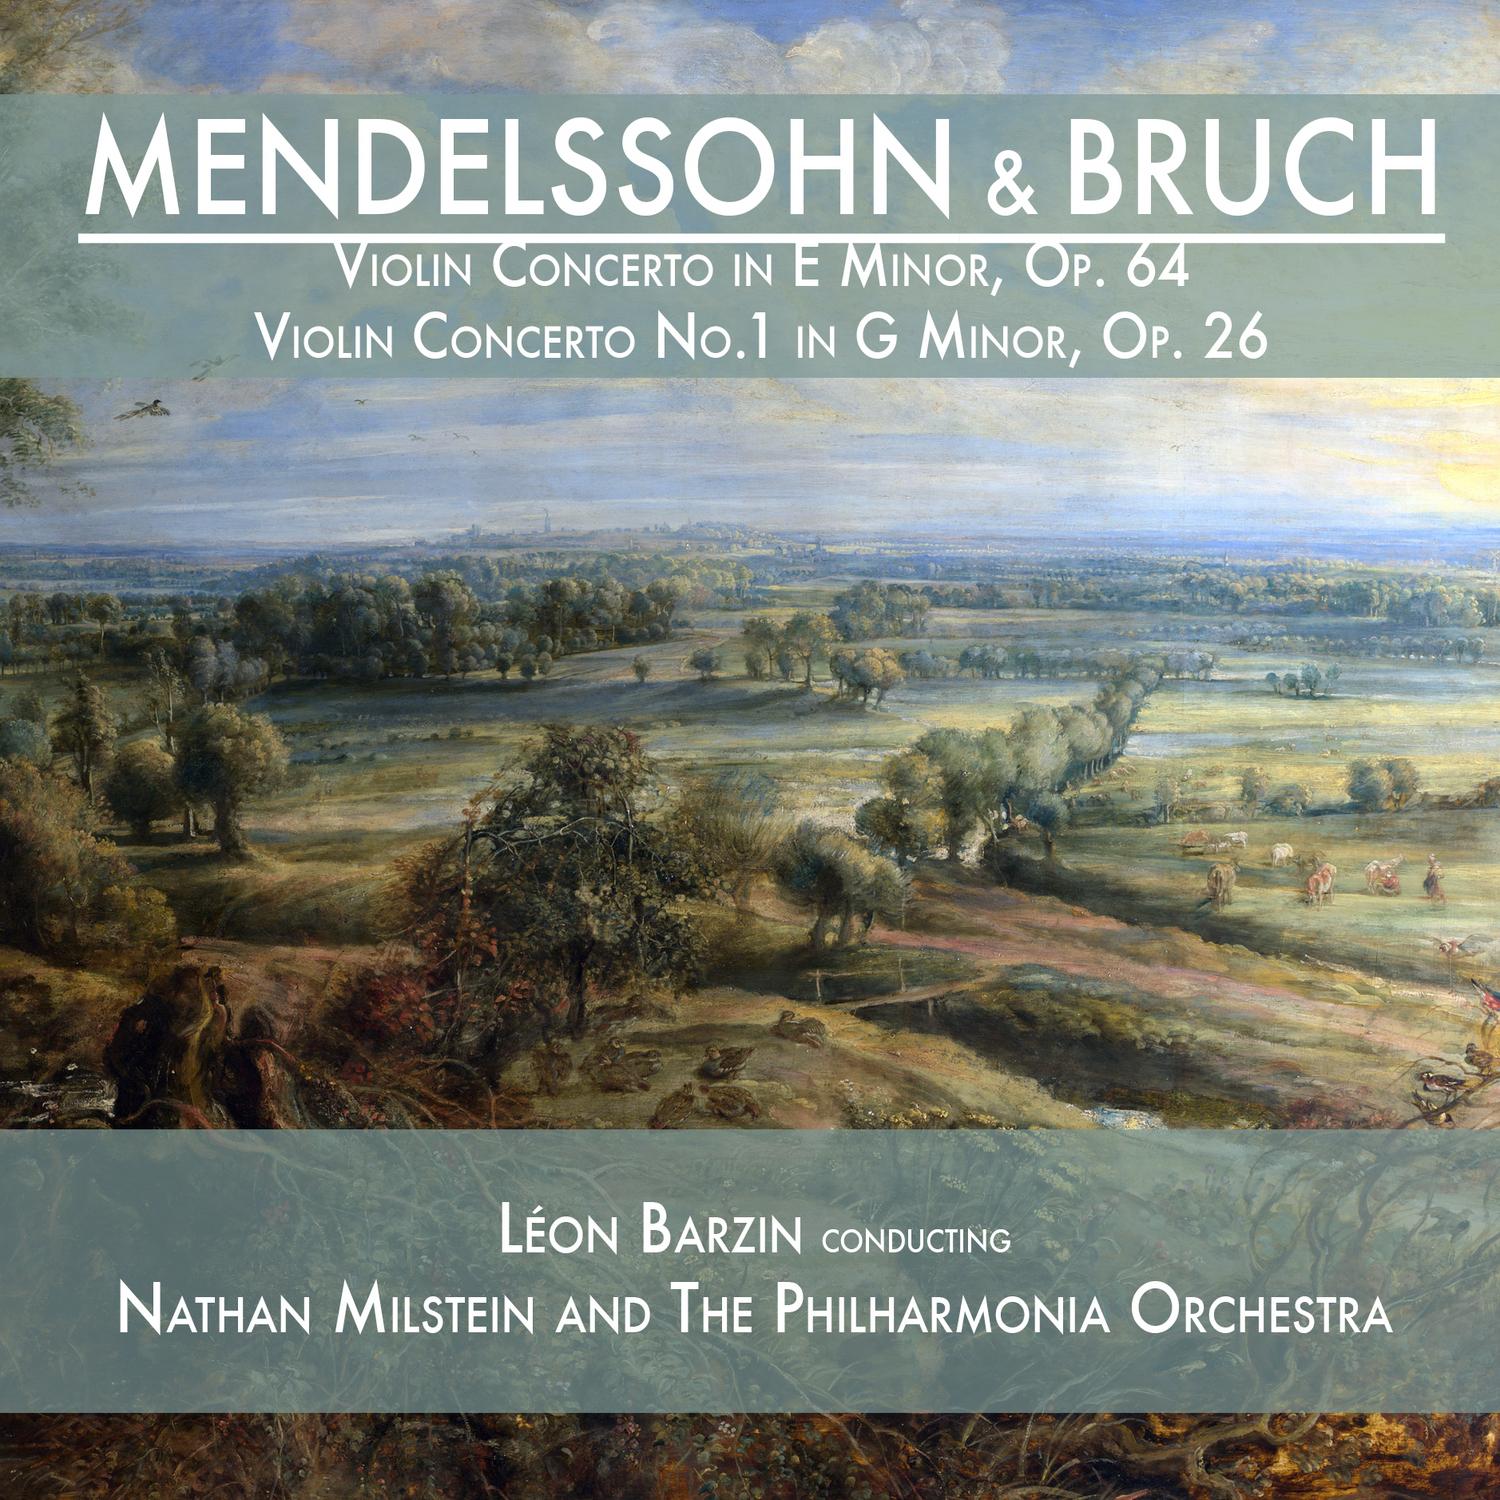 Mendelssohn: Violin Concerto in E Minor, Op. 64 & Bruch: Violin Concerto No.1 in G Minor, Op. 26